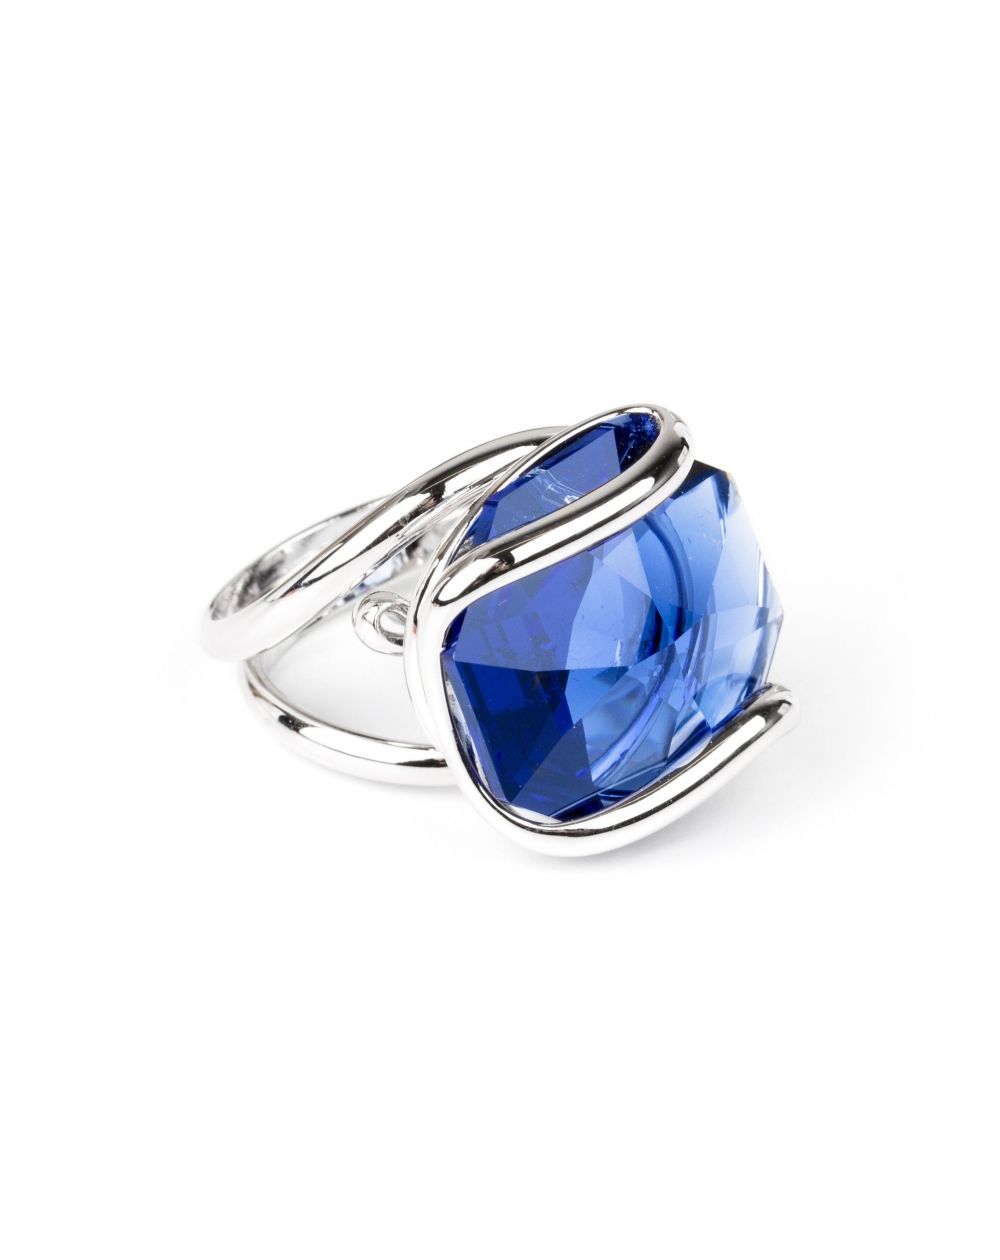 Marazzini - dark blue crystal Swarovski ring